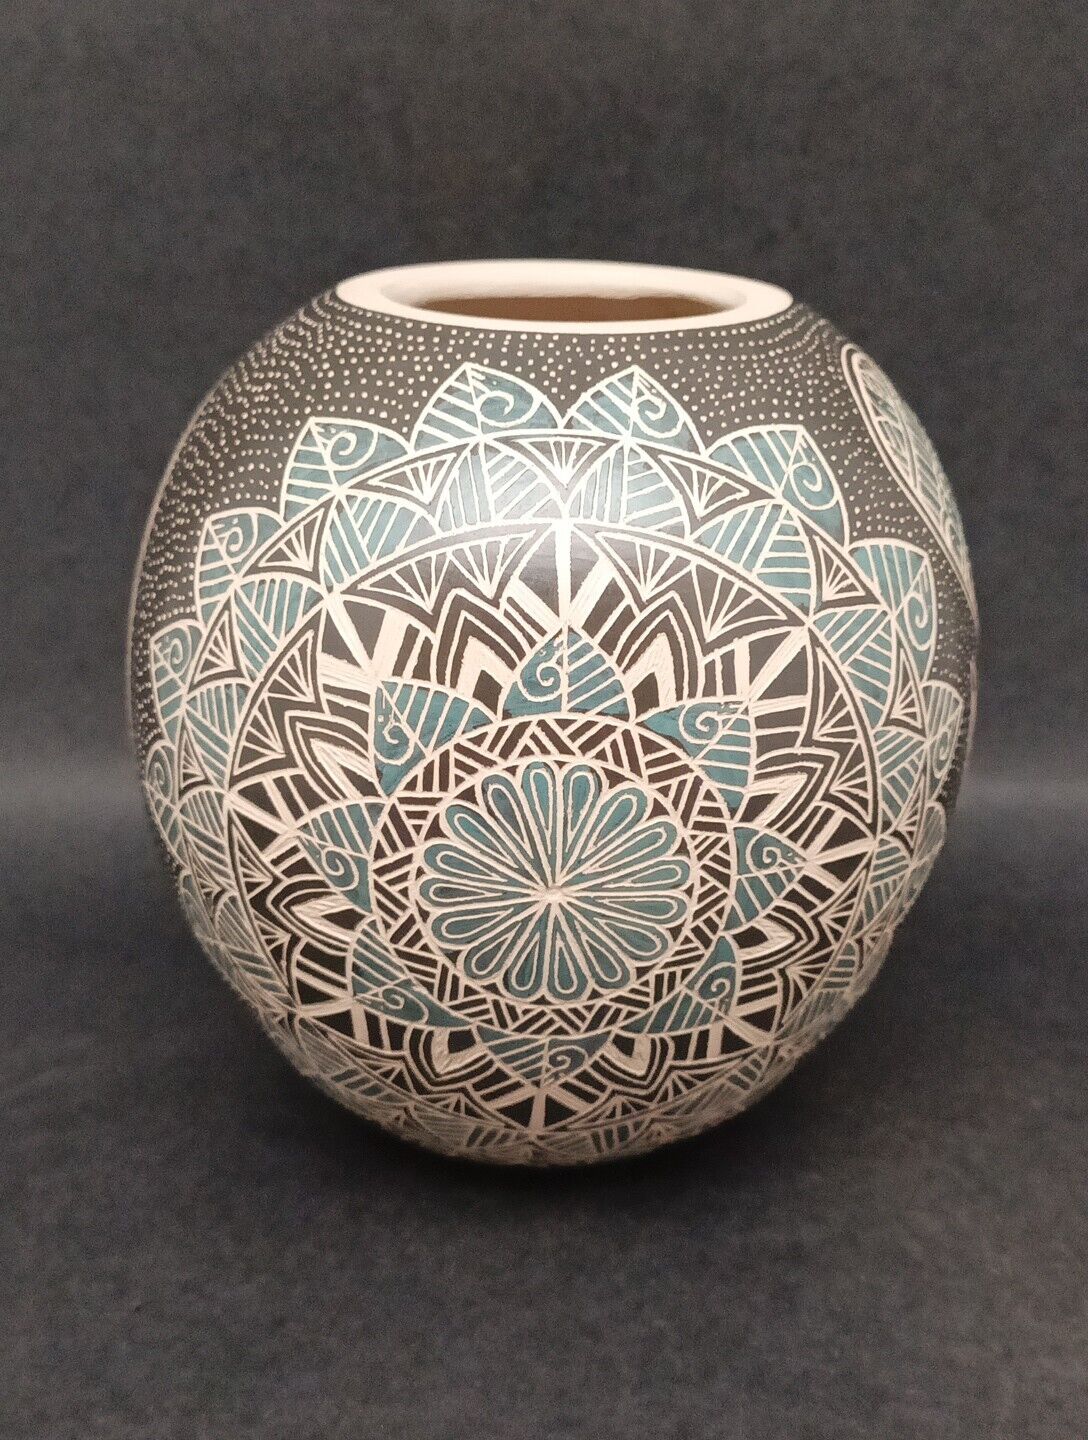 Mata Ortiz  Pottery Flower Design By Tanya Veloz 4.5